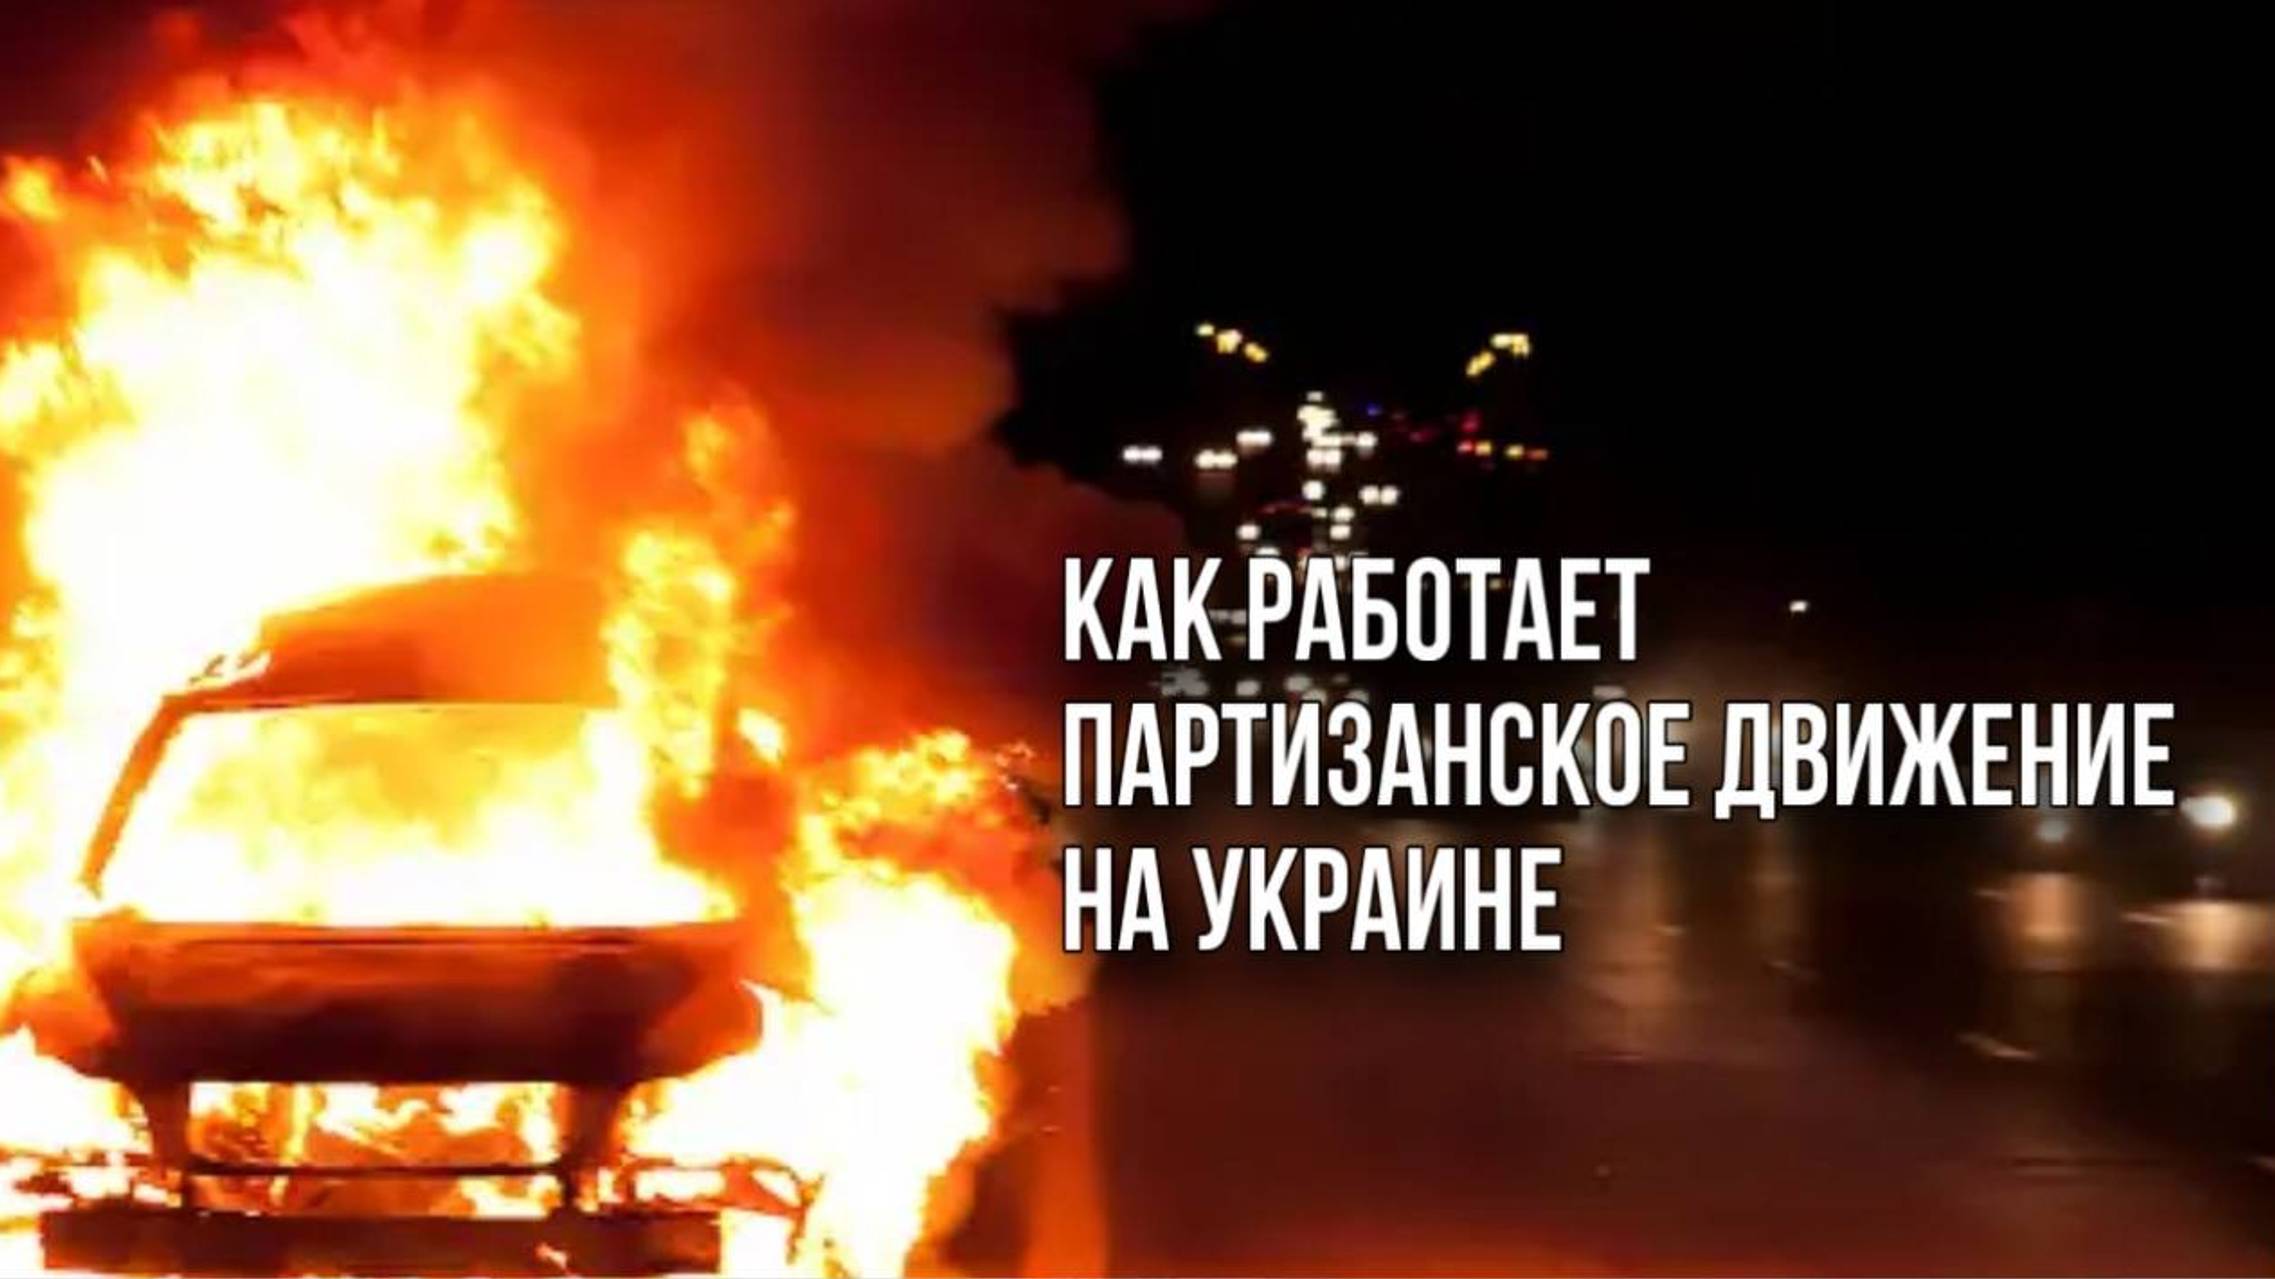 Пятая машина за ночь: смотрите, как партизаны на Украине мстят ТЦКшникам